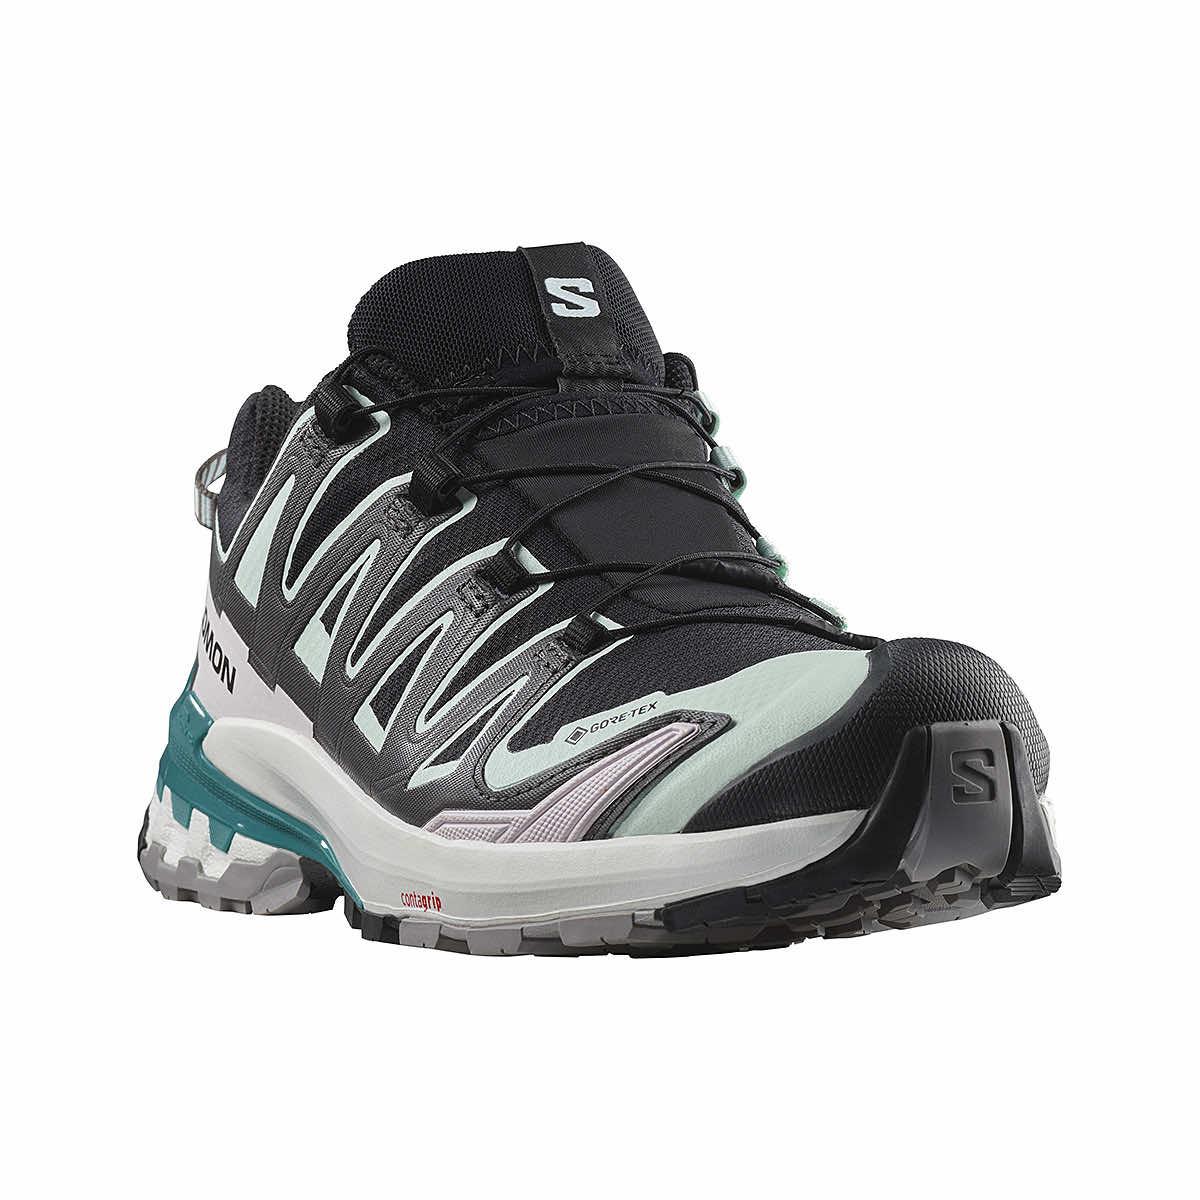 betaling Forbedring træfning Women's XA Pro 3D V9 Gore-Tex Trail Running Shoes